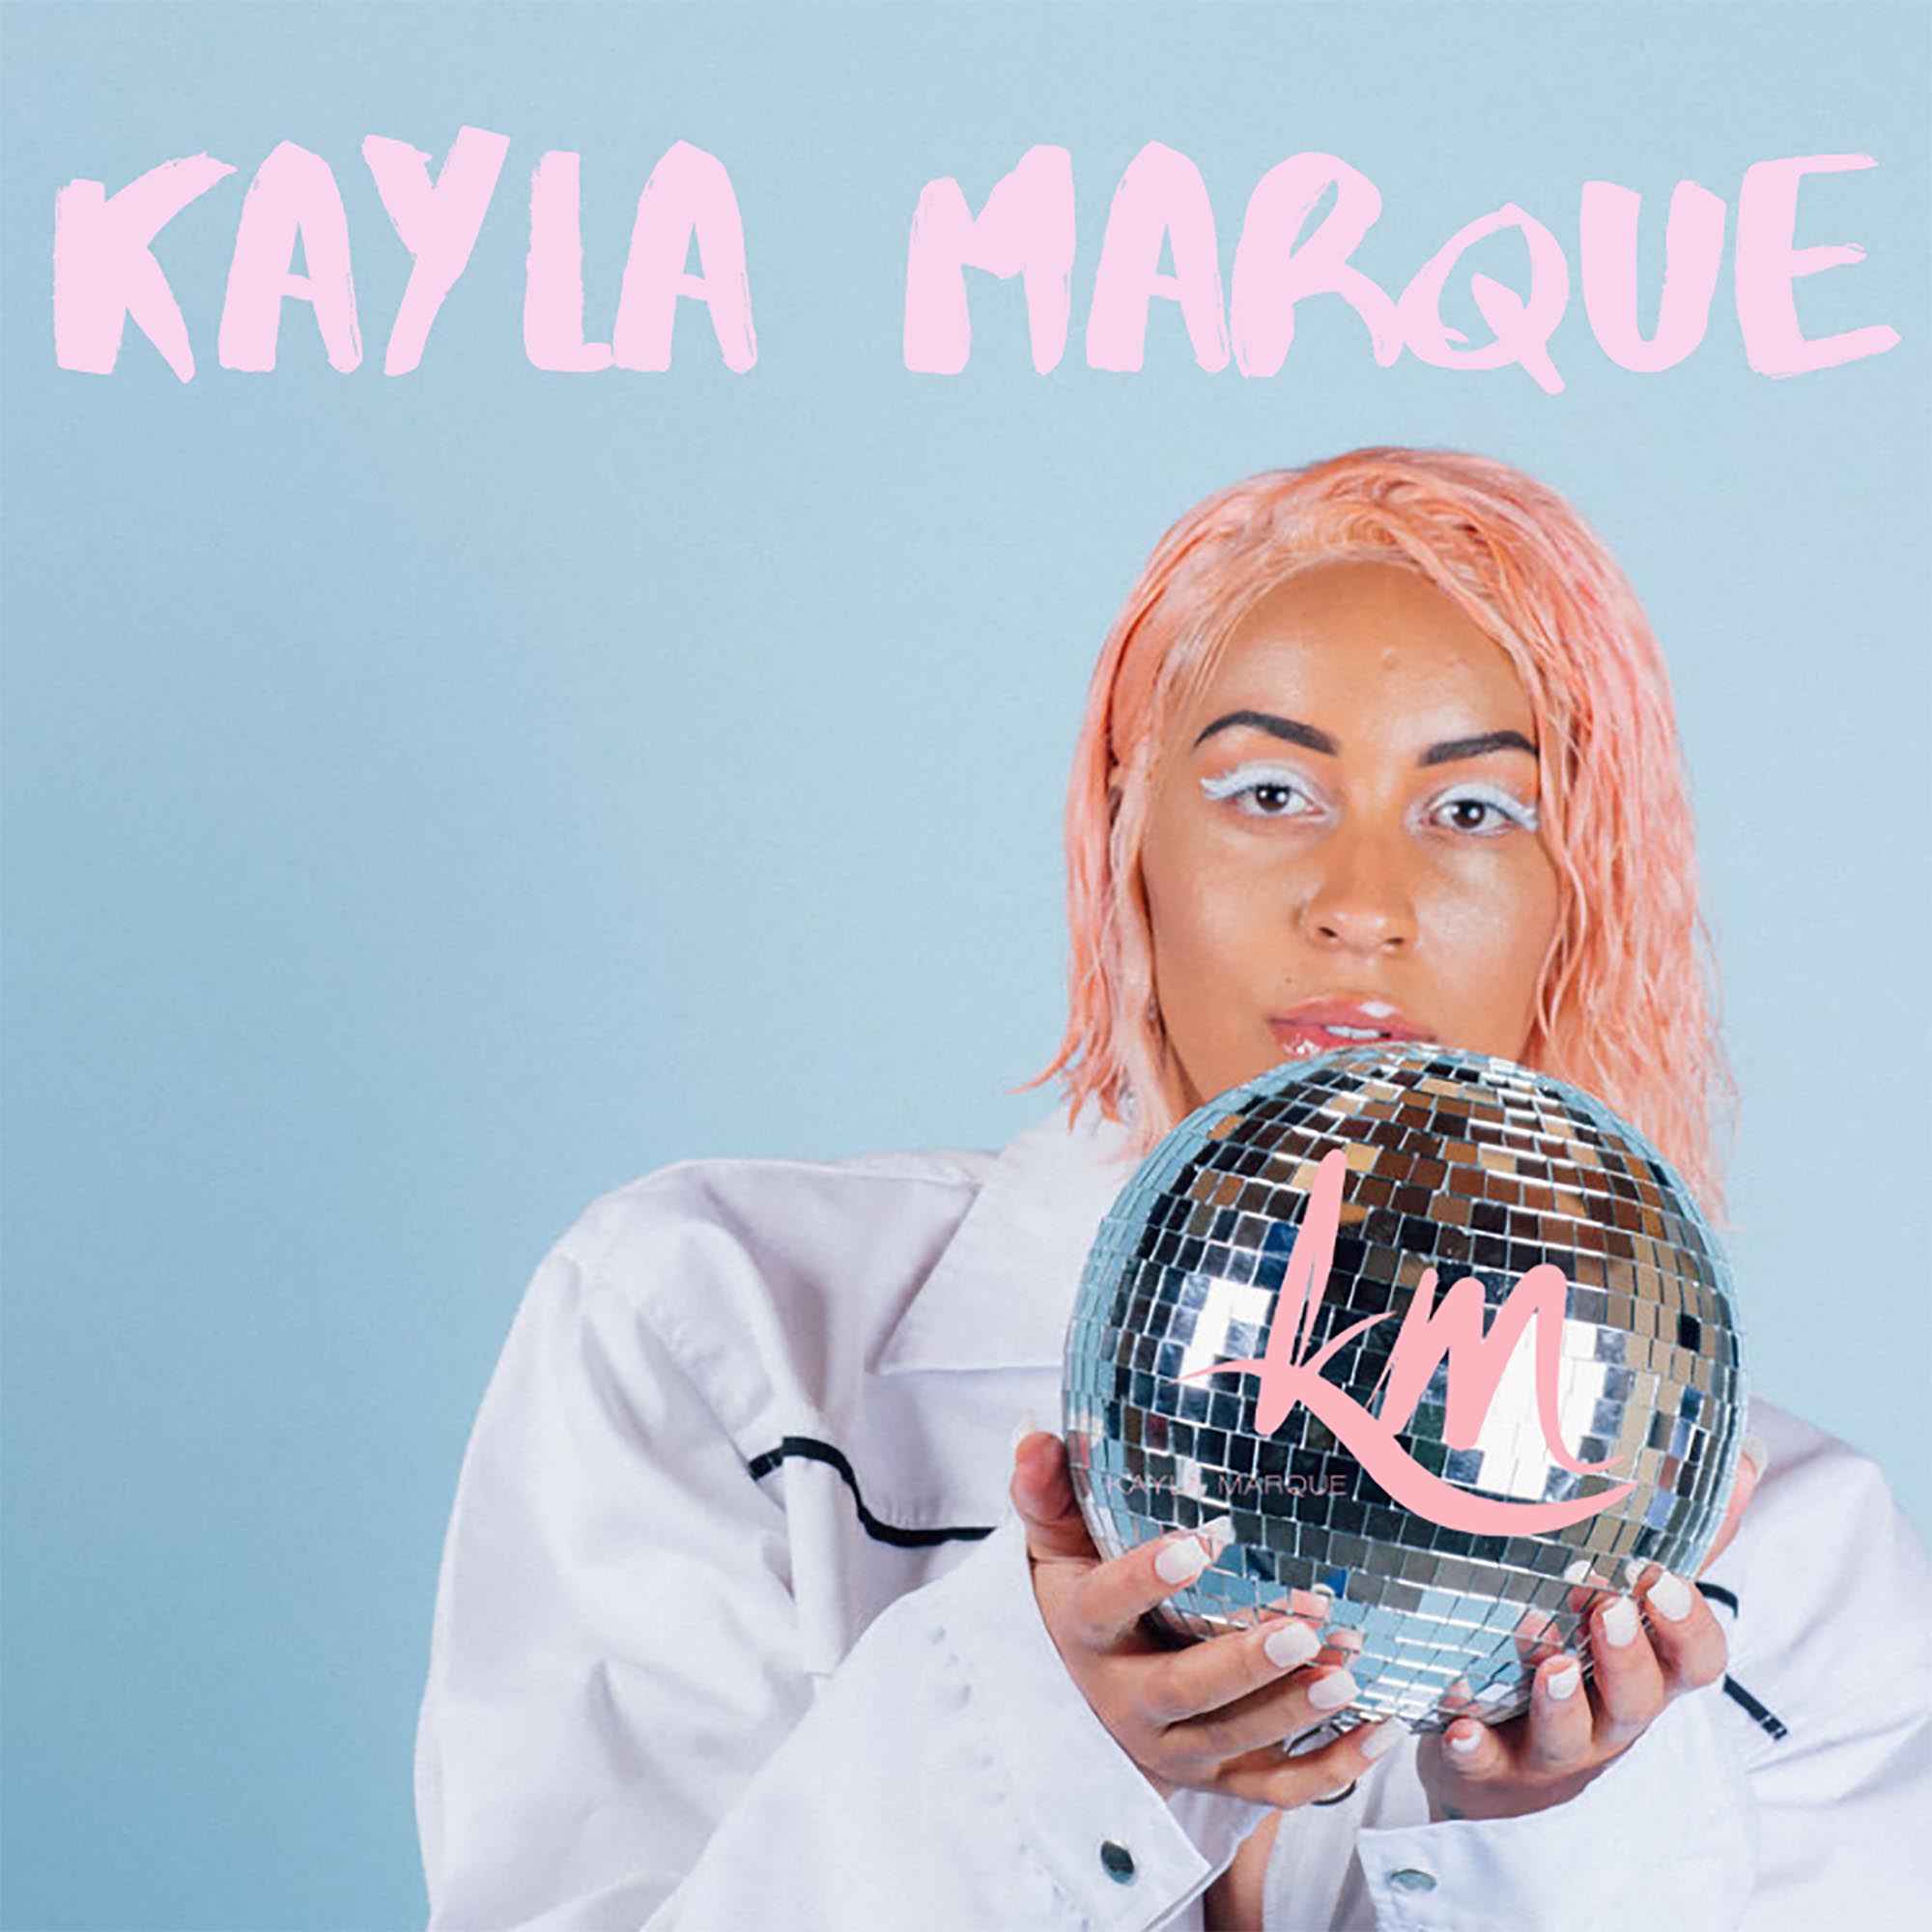 Kayla Marque